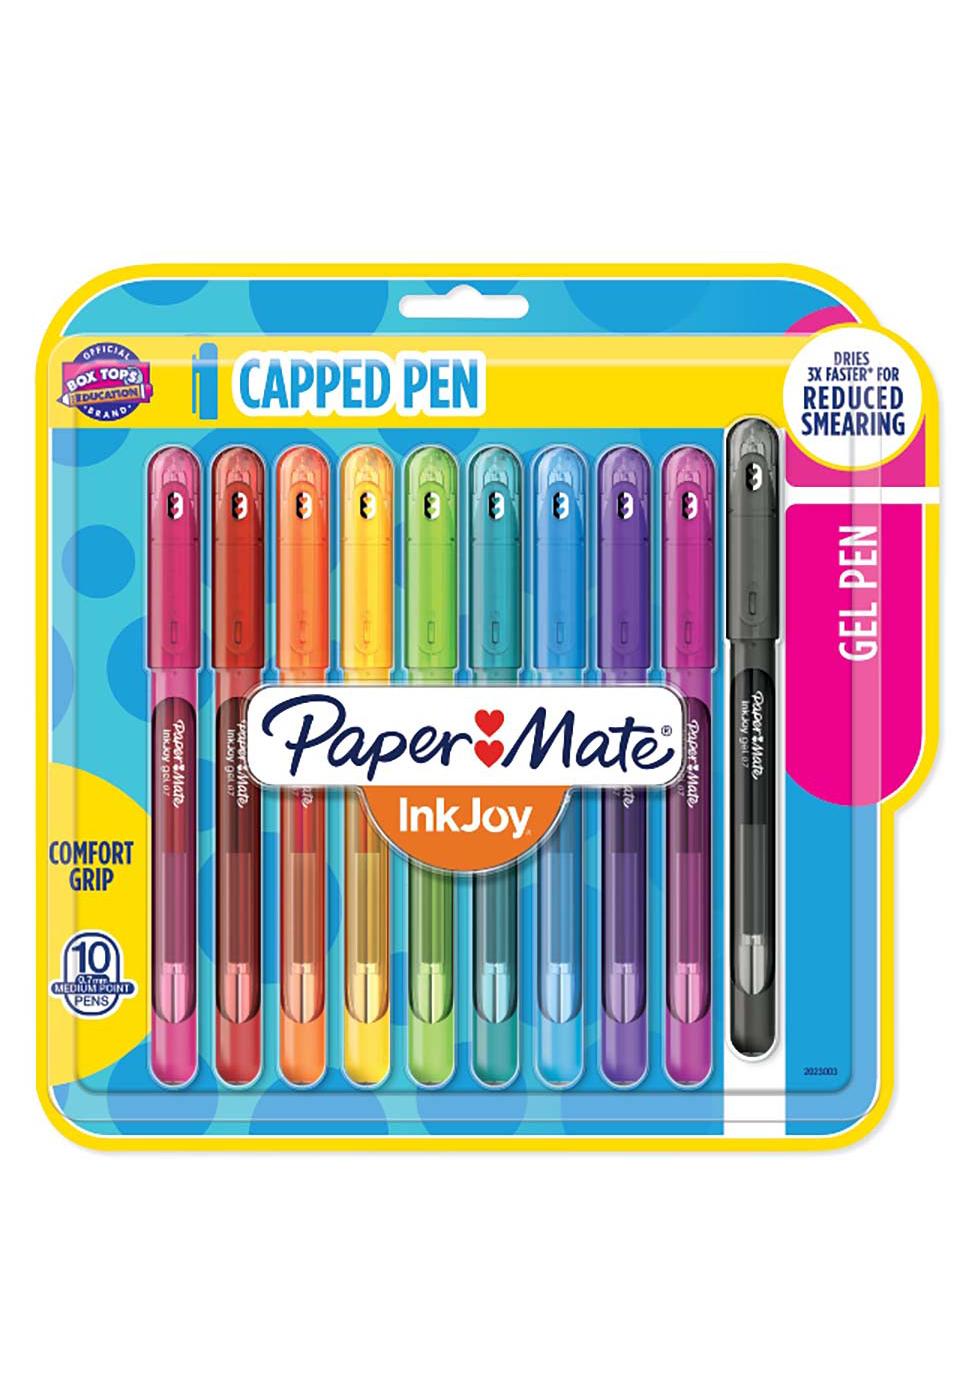 Paper Mate Profile Black Gel Pens - Shop Pens at H-E-B